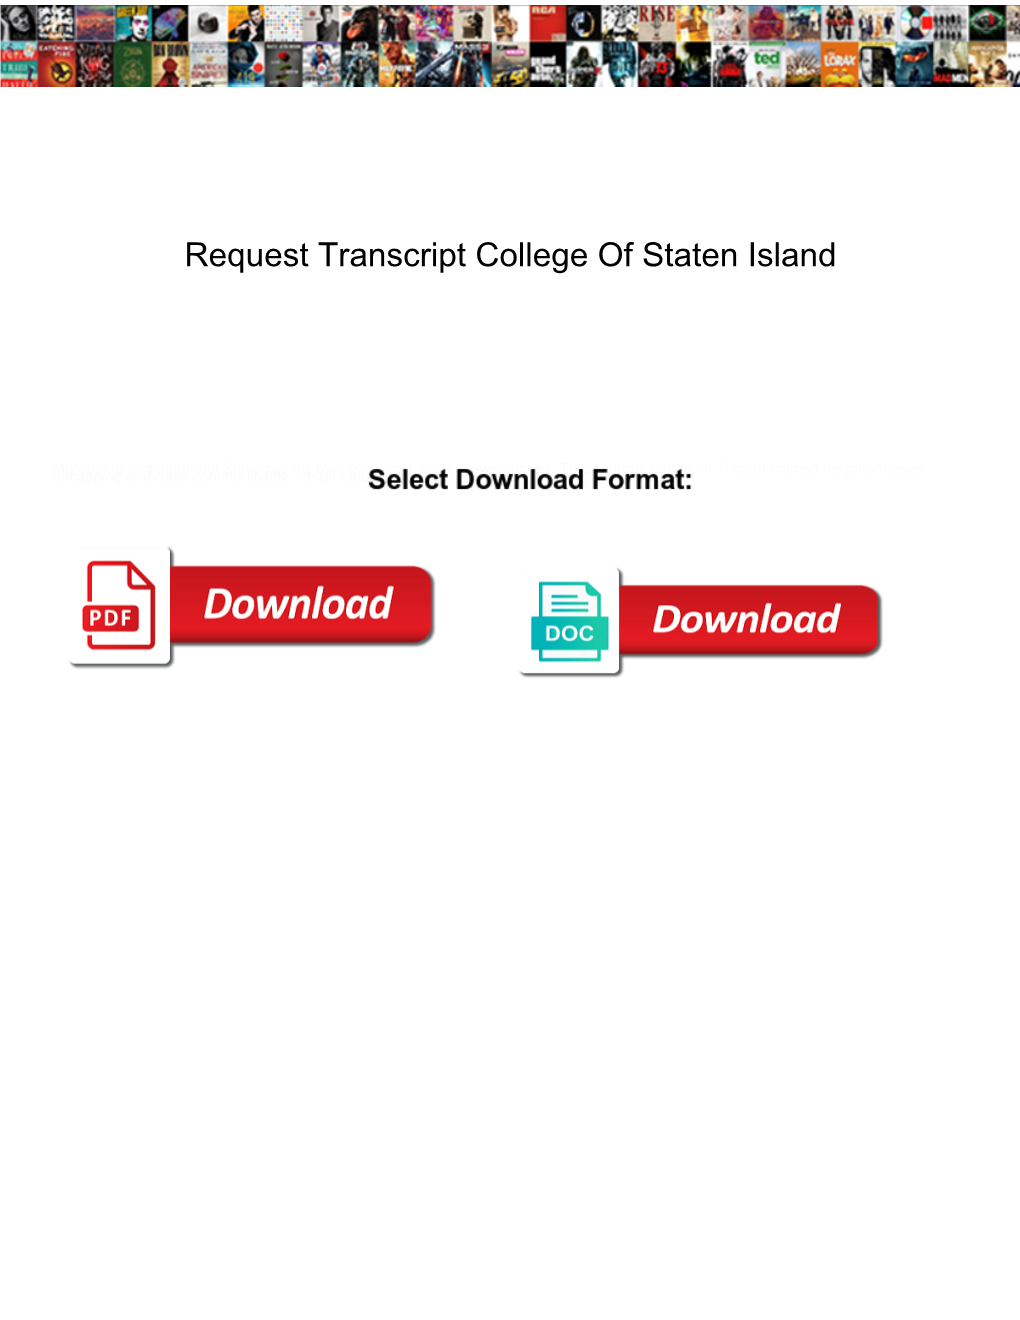 Request Transcript College of Staten Island